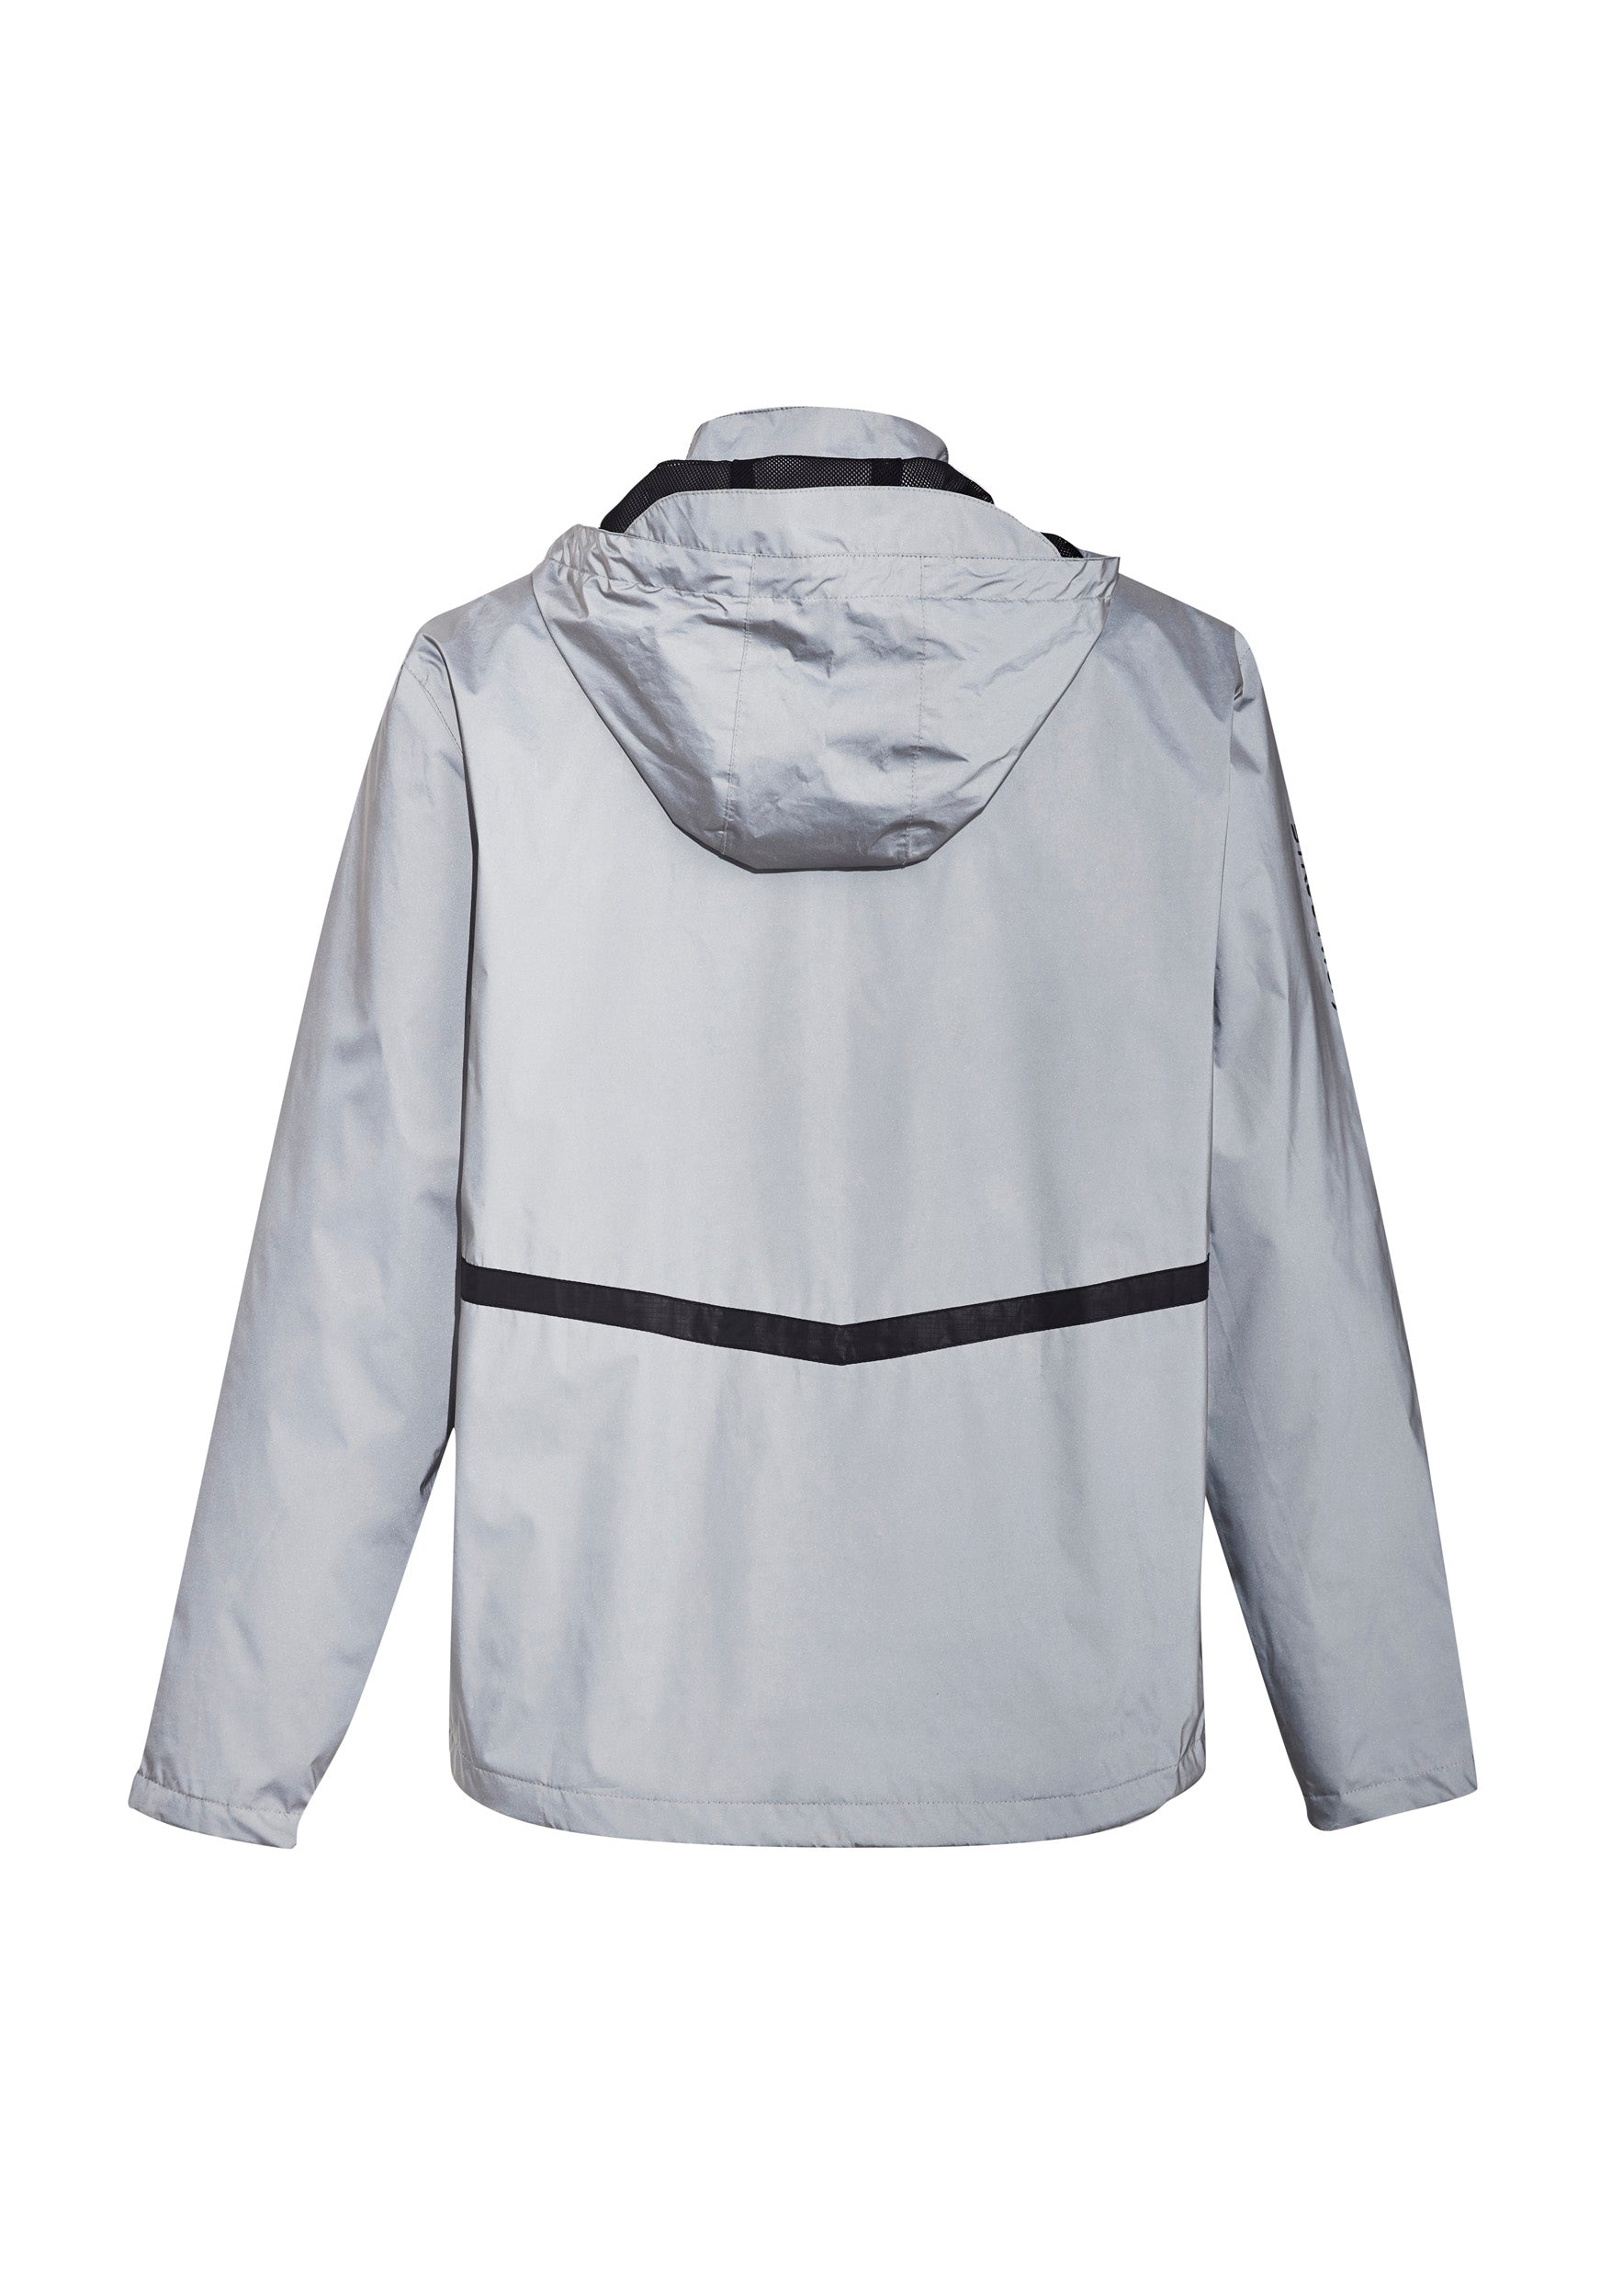 Unisex Streetworx Reflective Waterproof Jacket